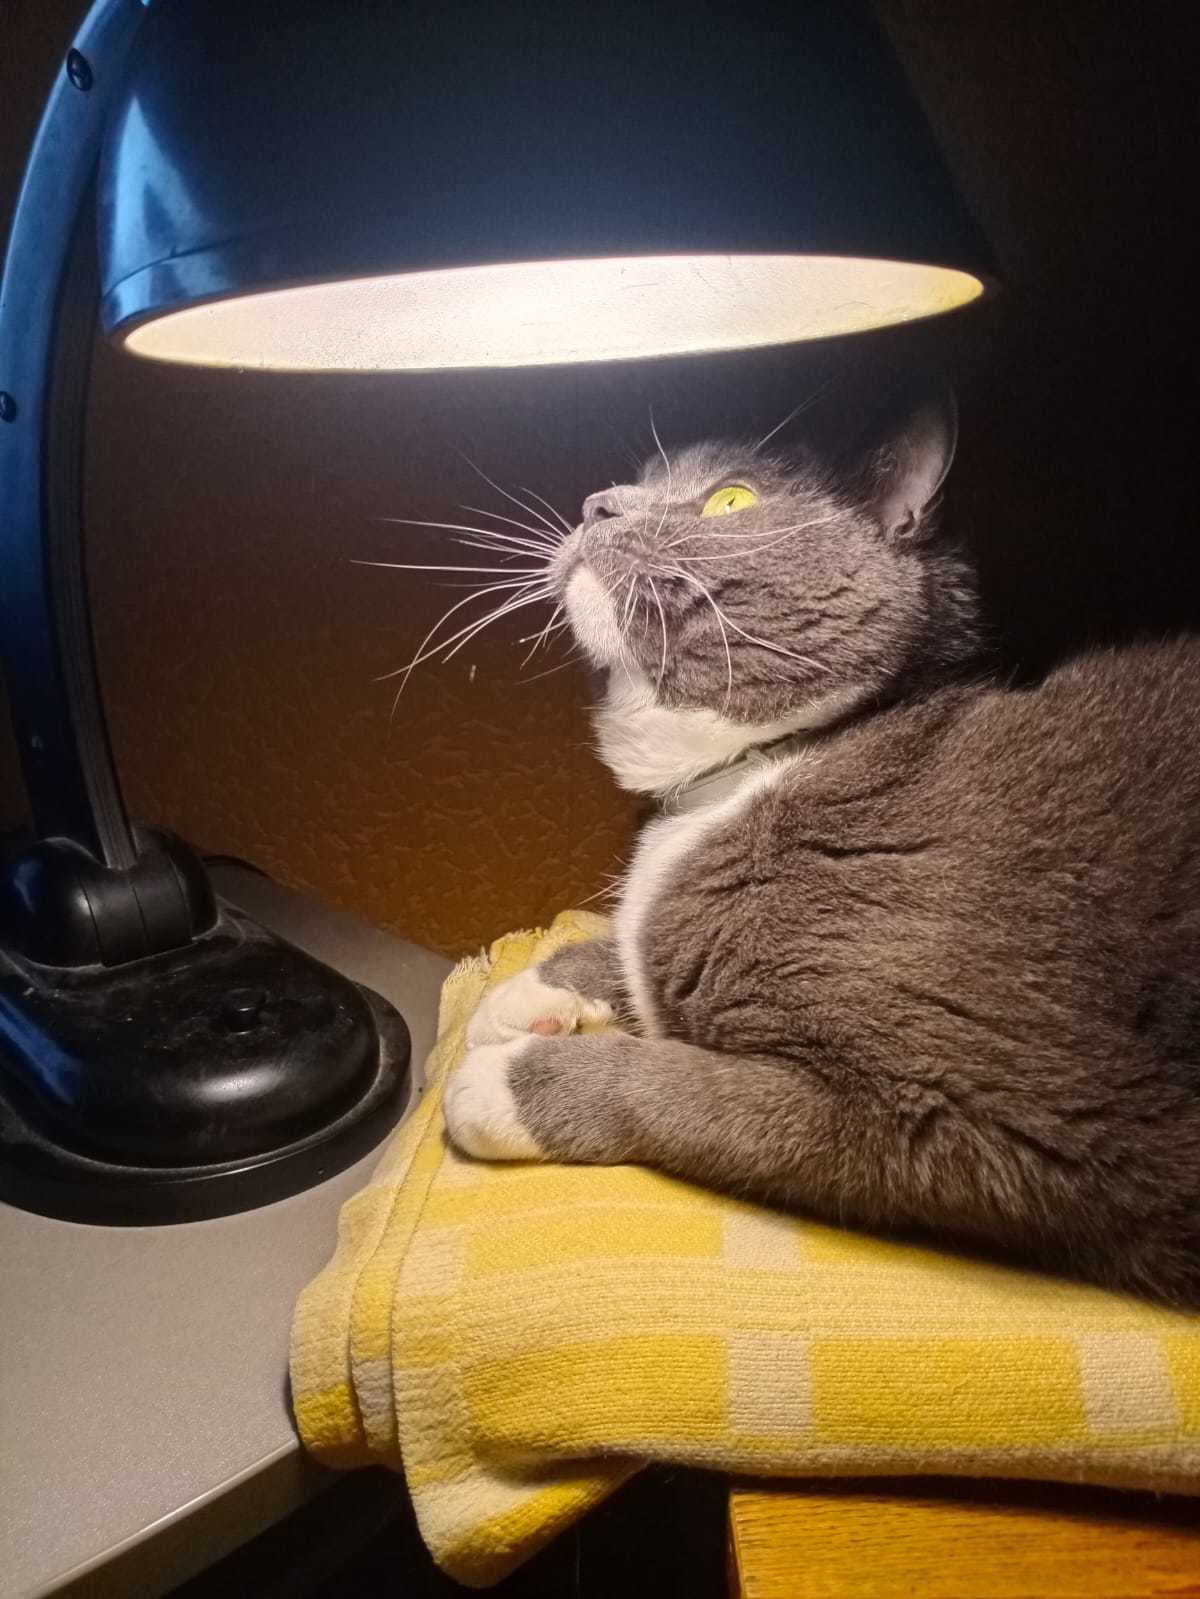 Лампа кот